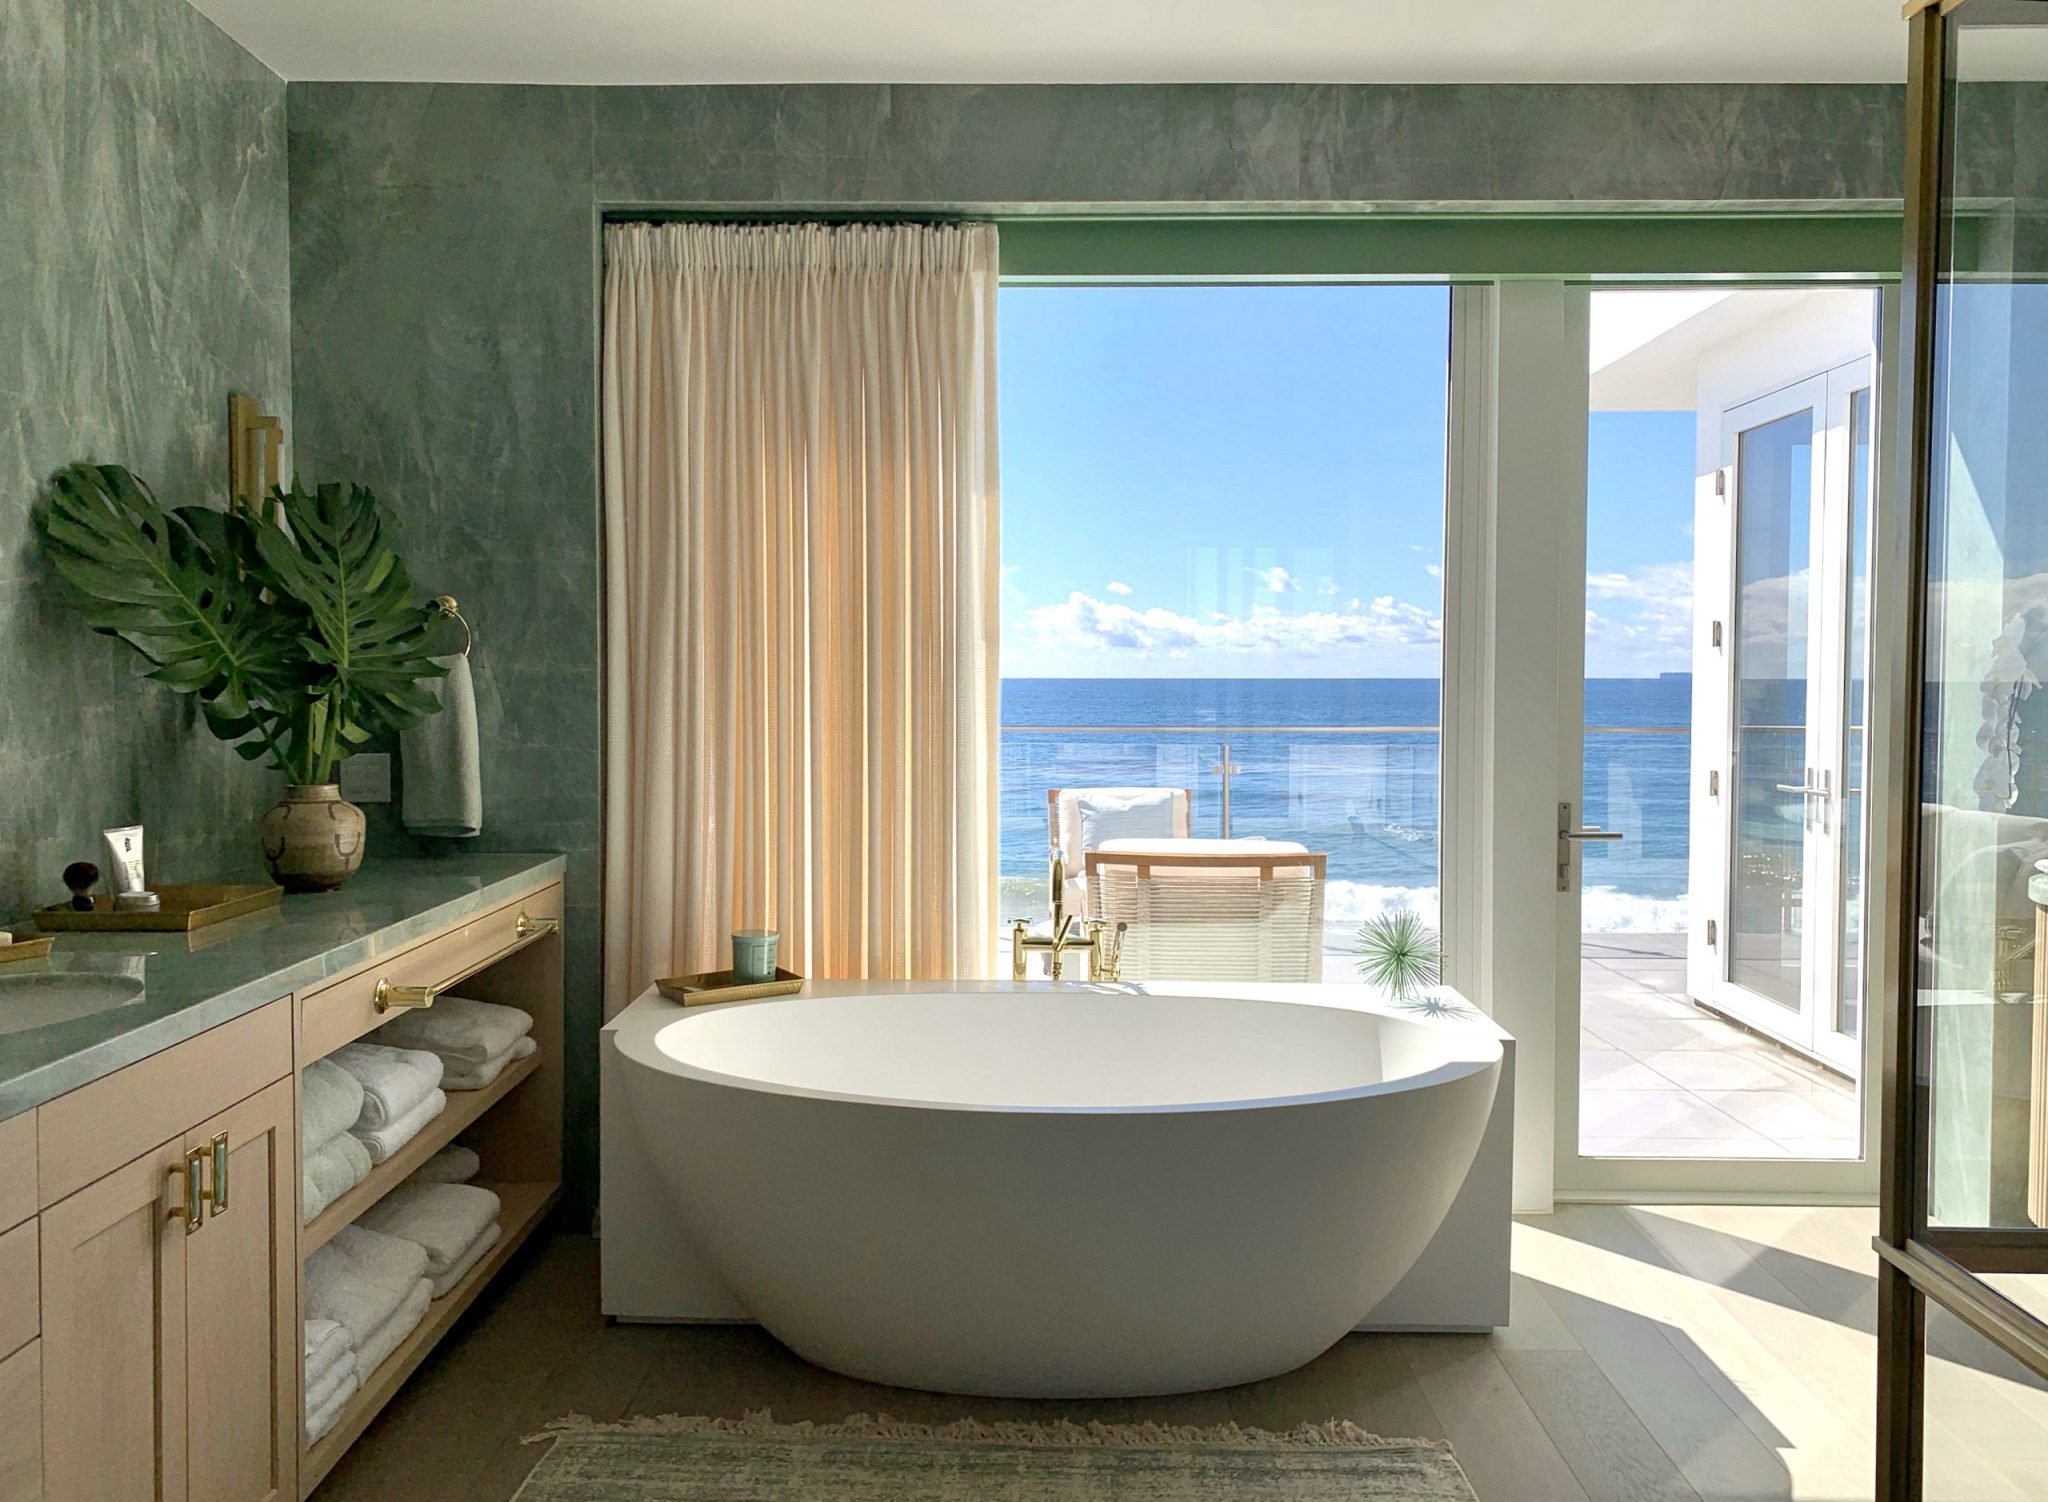 Beautiful Coastal Bathroom Designs Perfect For The Beach House